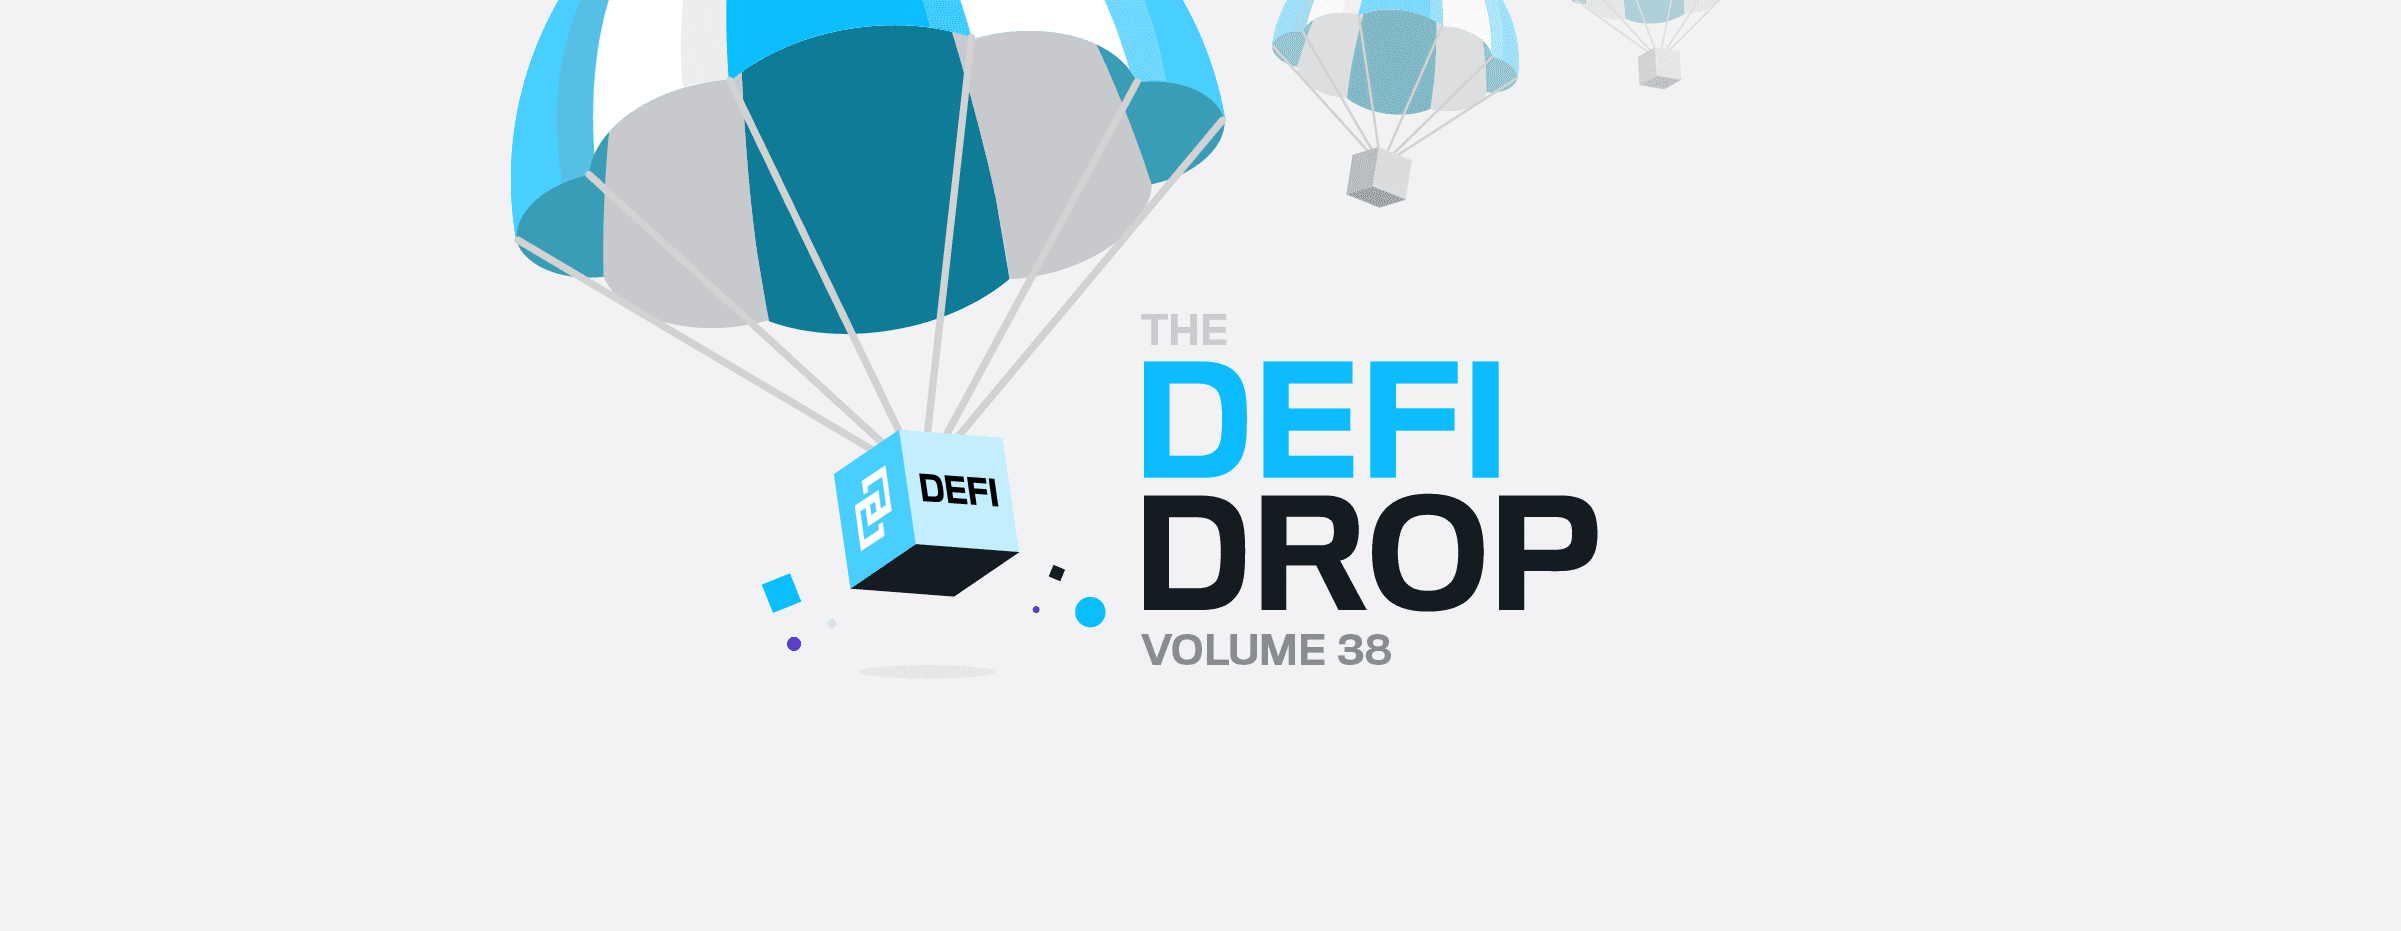 The DeFi Drop Volume 38